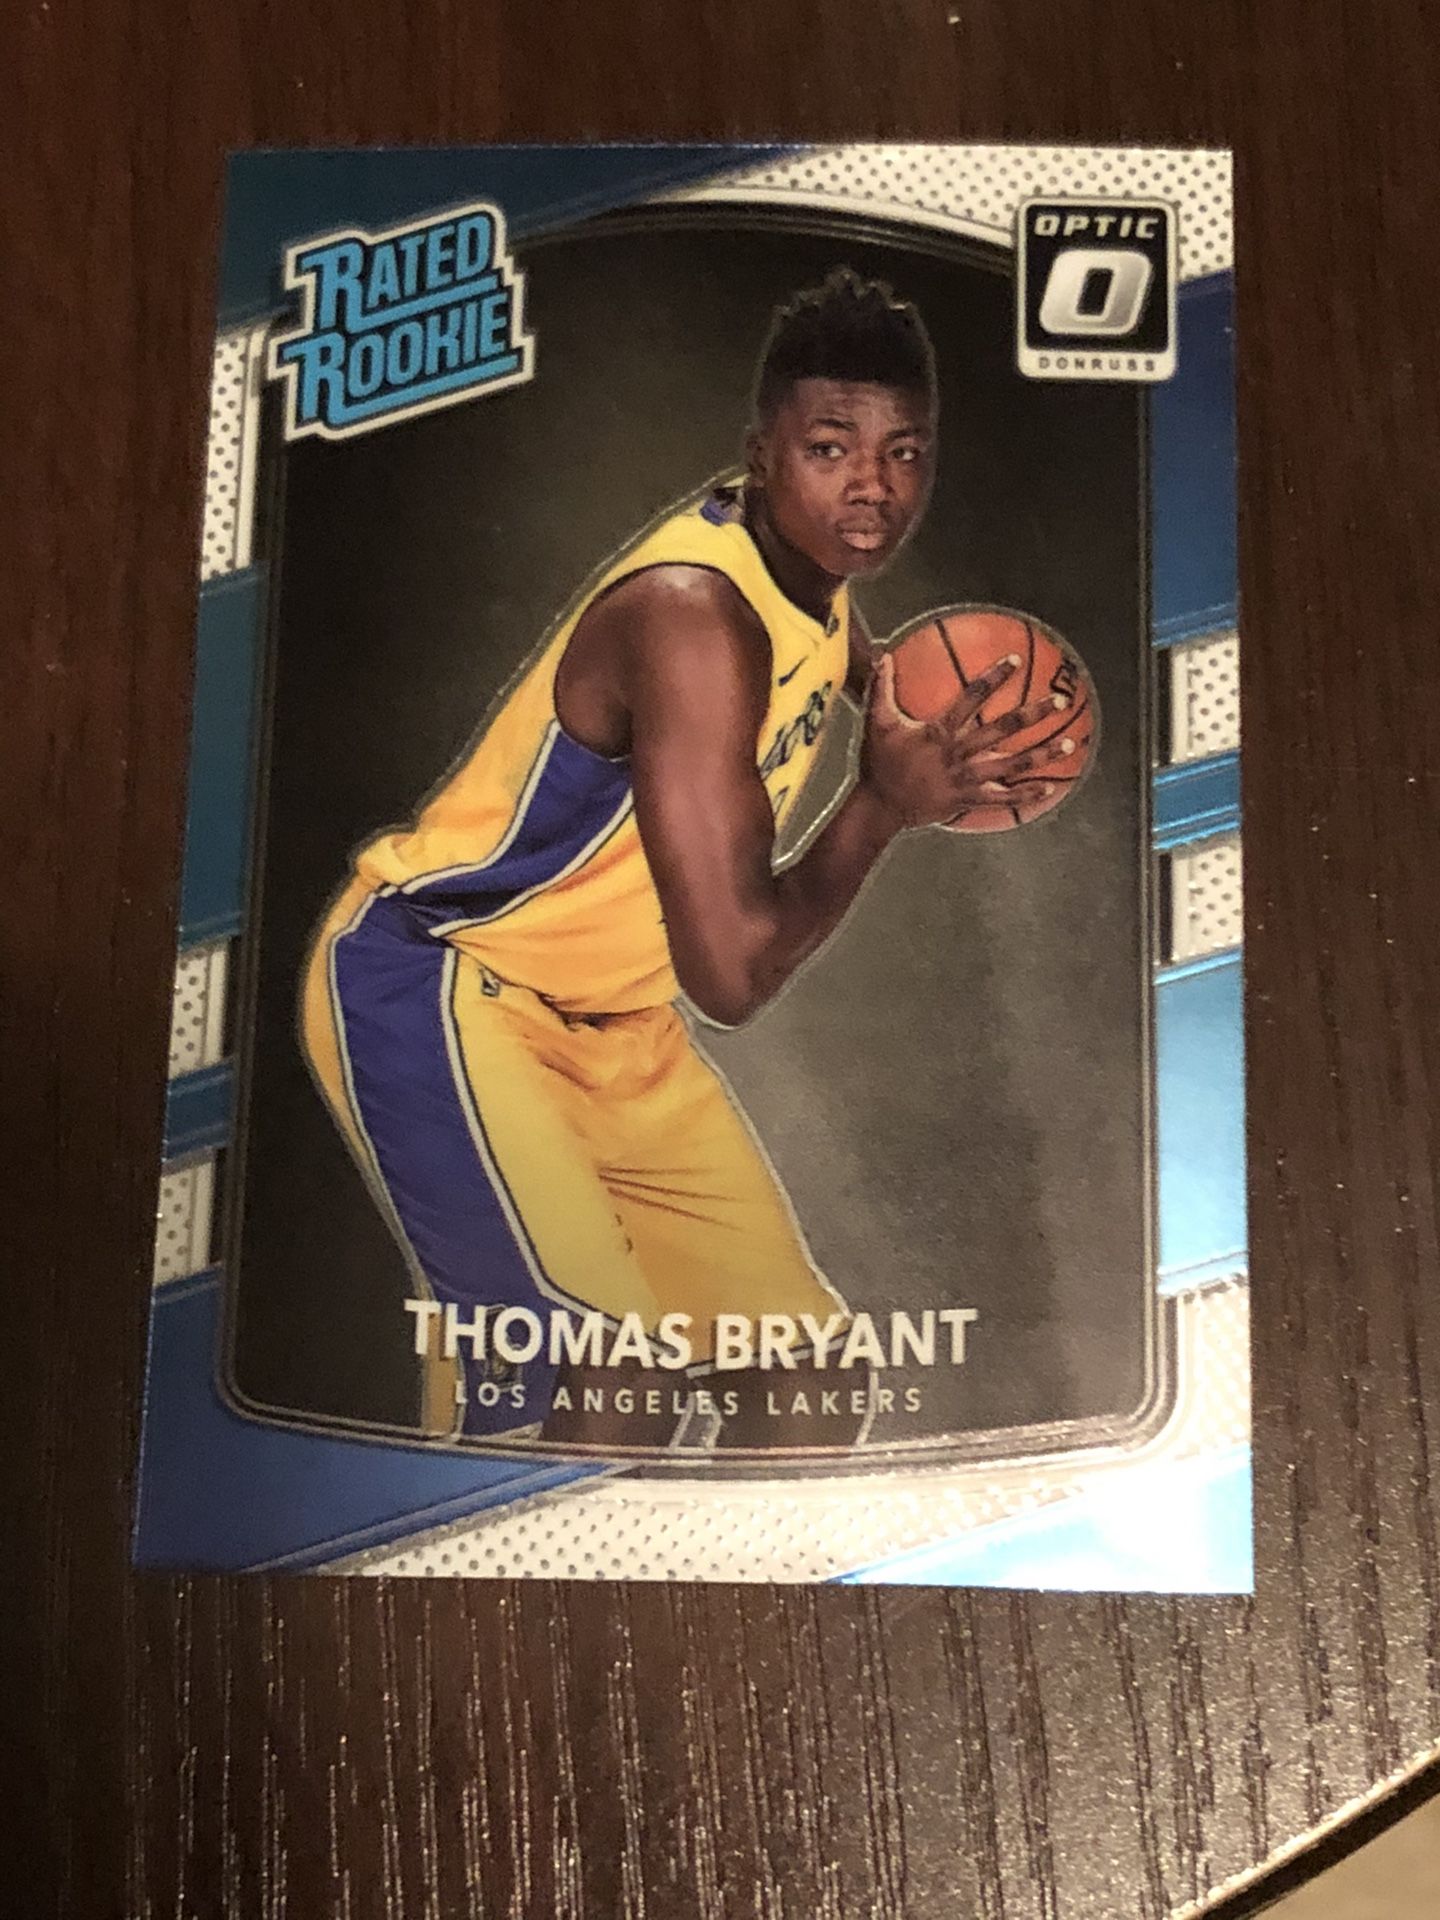 2017 optic Thomas Bryant rookie